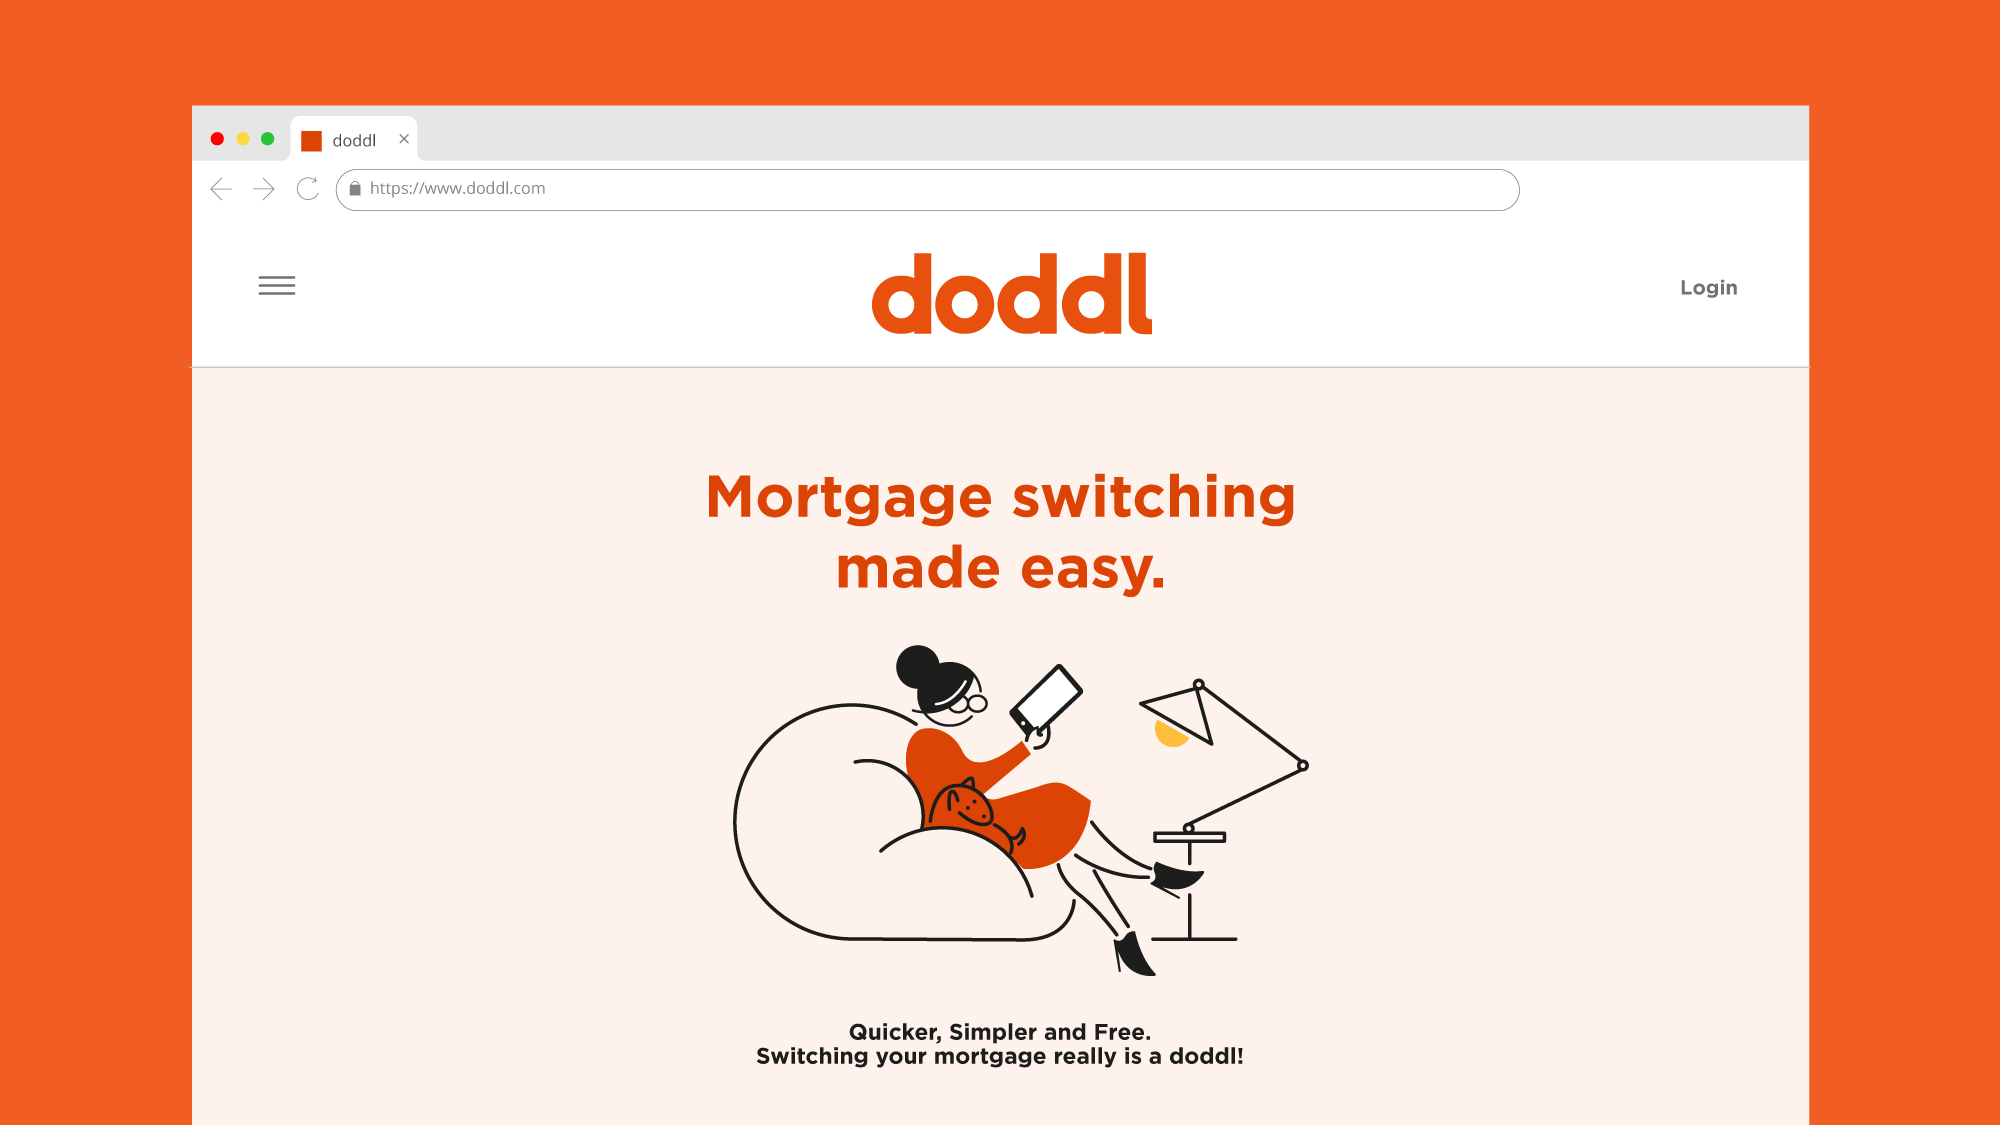 Cover image: doddl brand scheme